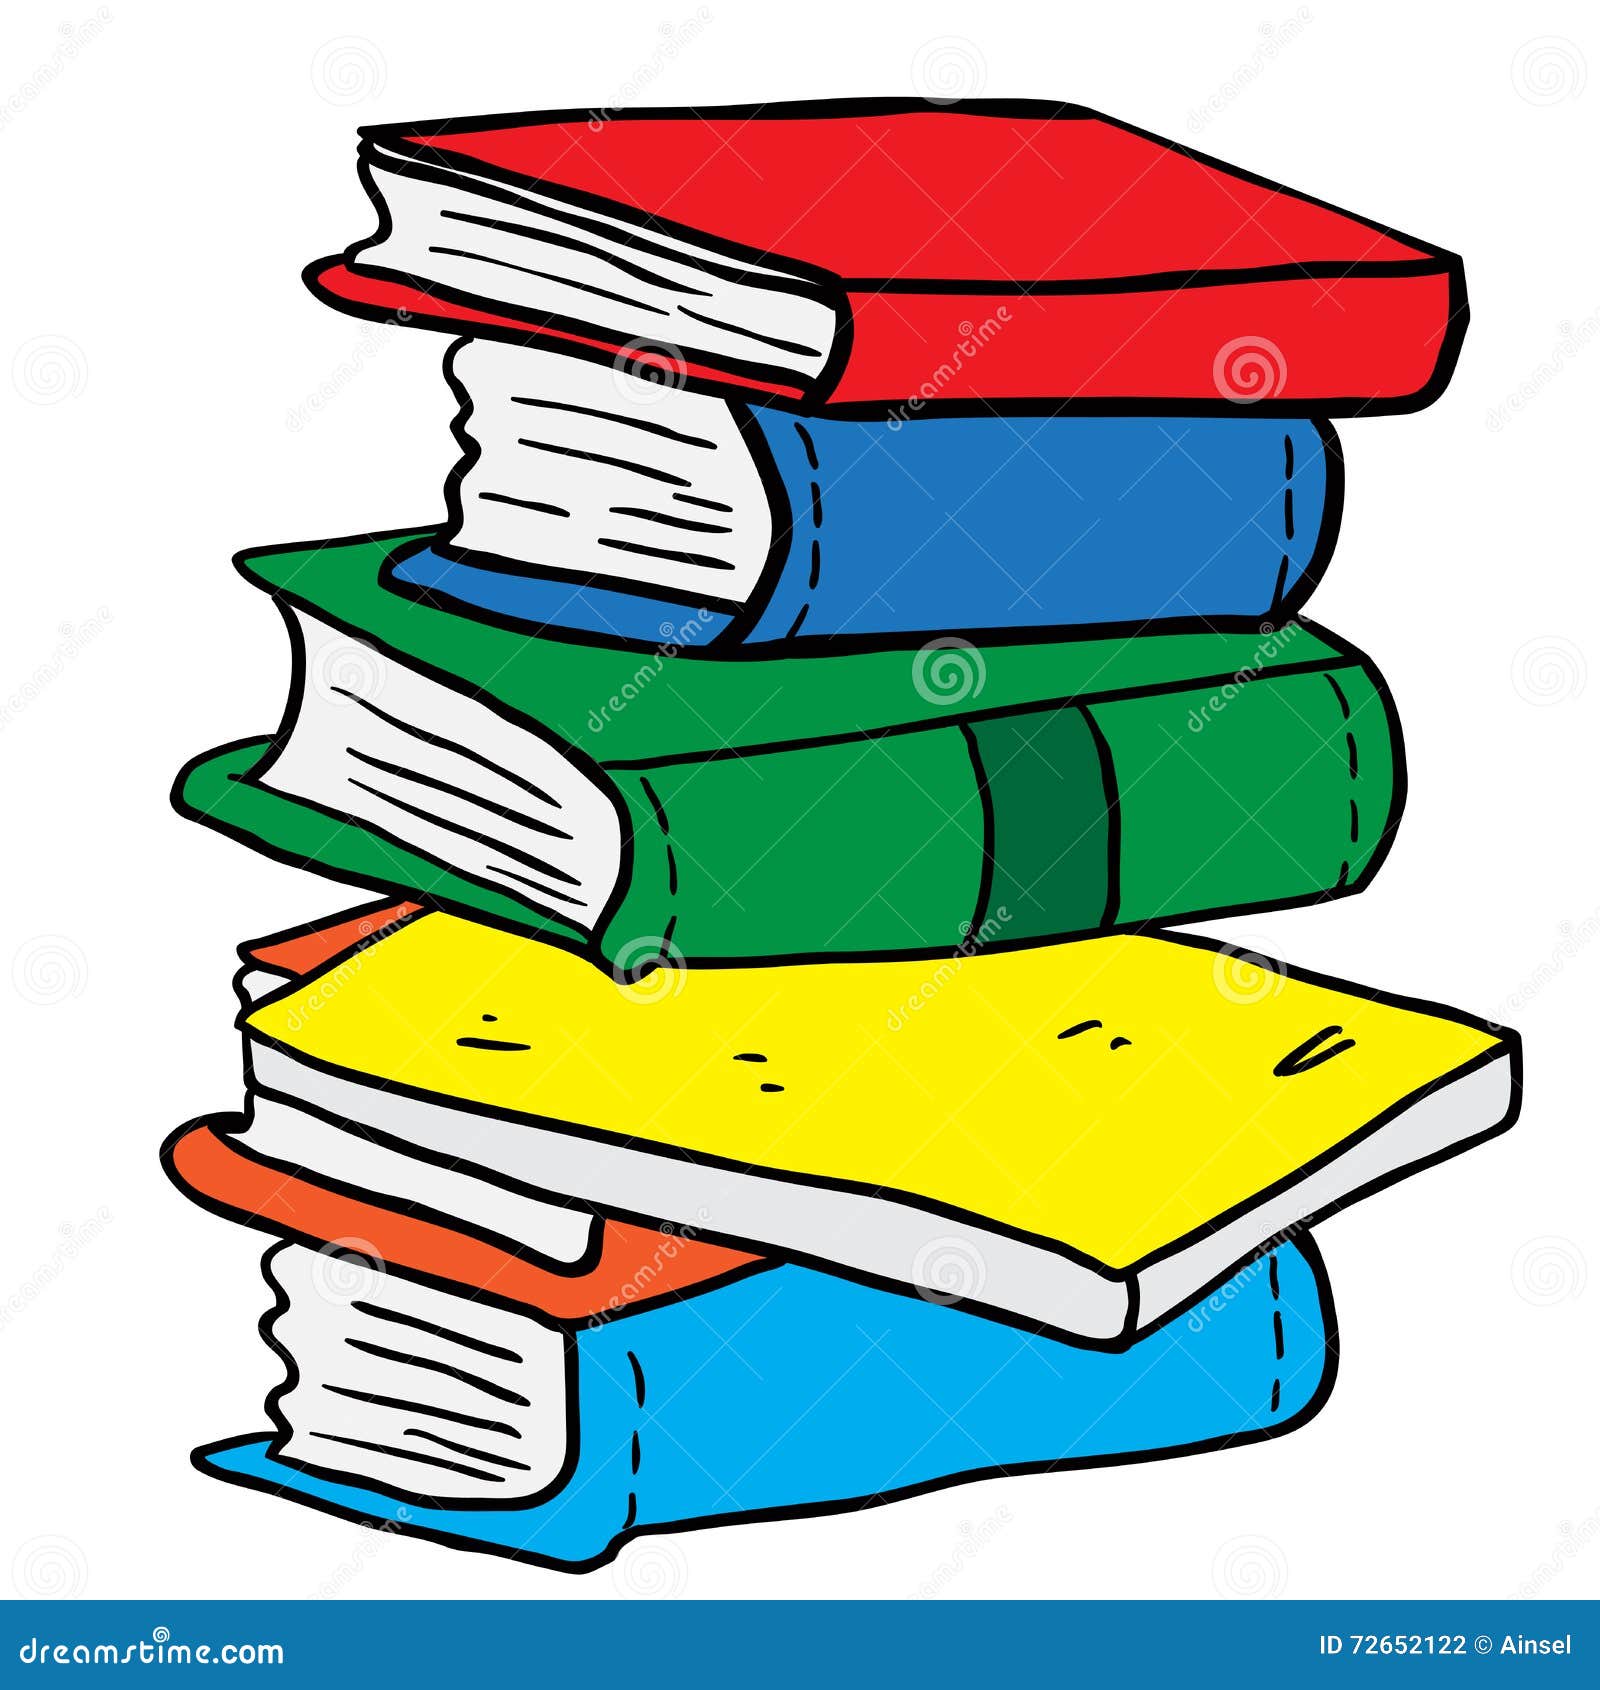 Pile of books stock illustration. Illustration of paper - 72652122